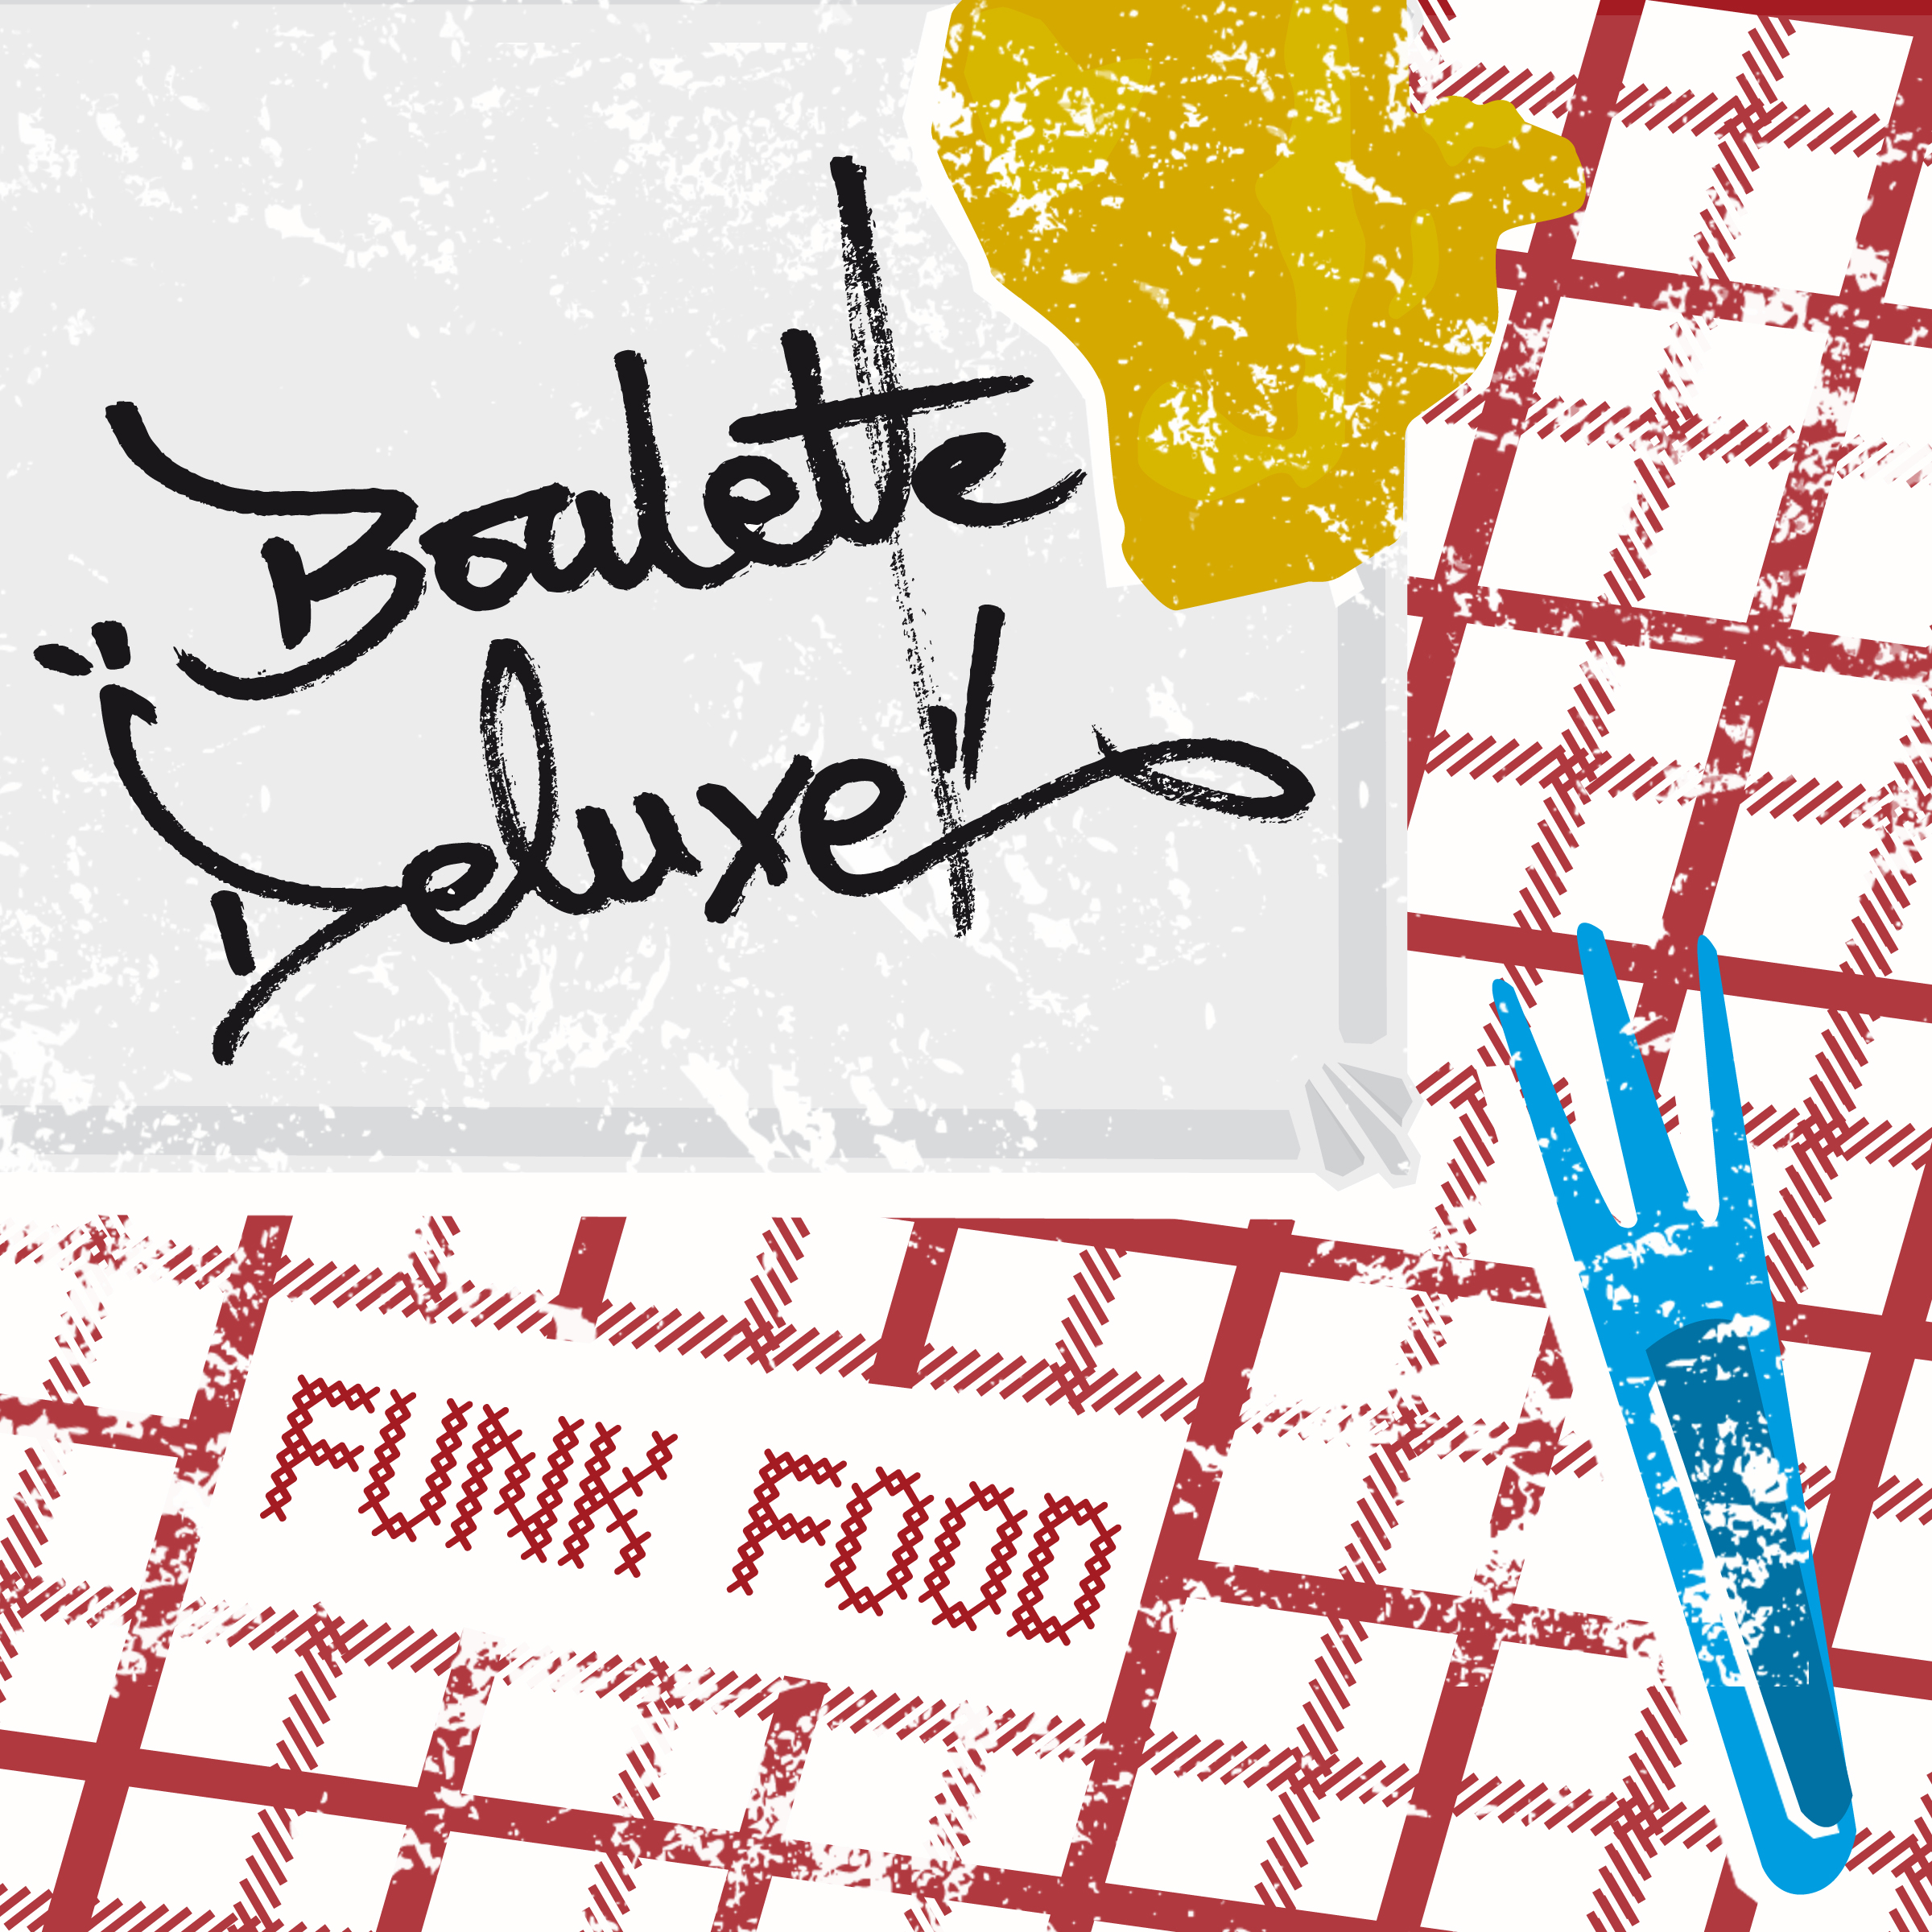 Boulette Deluxe – Funk Food